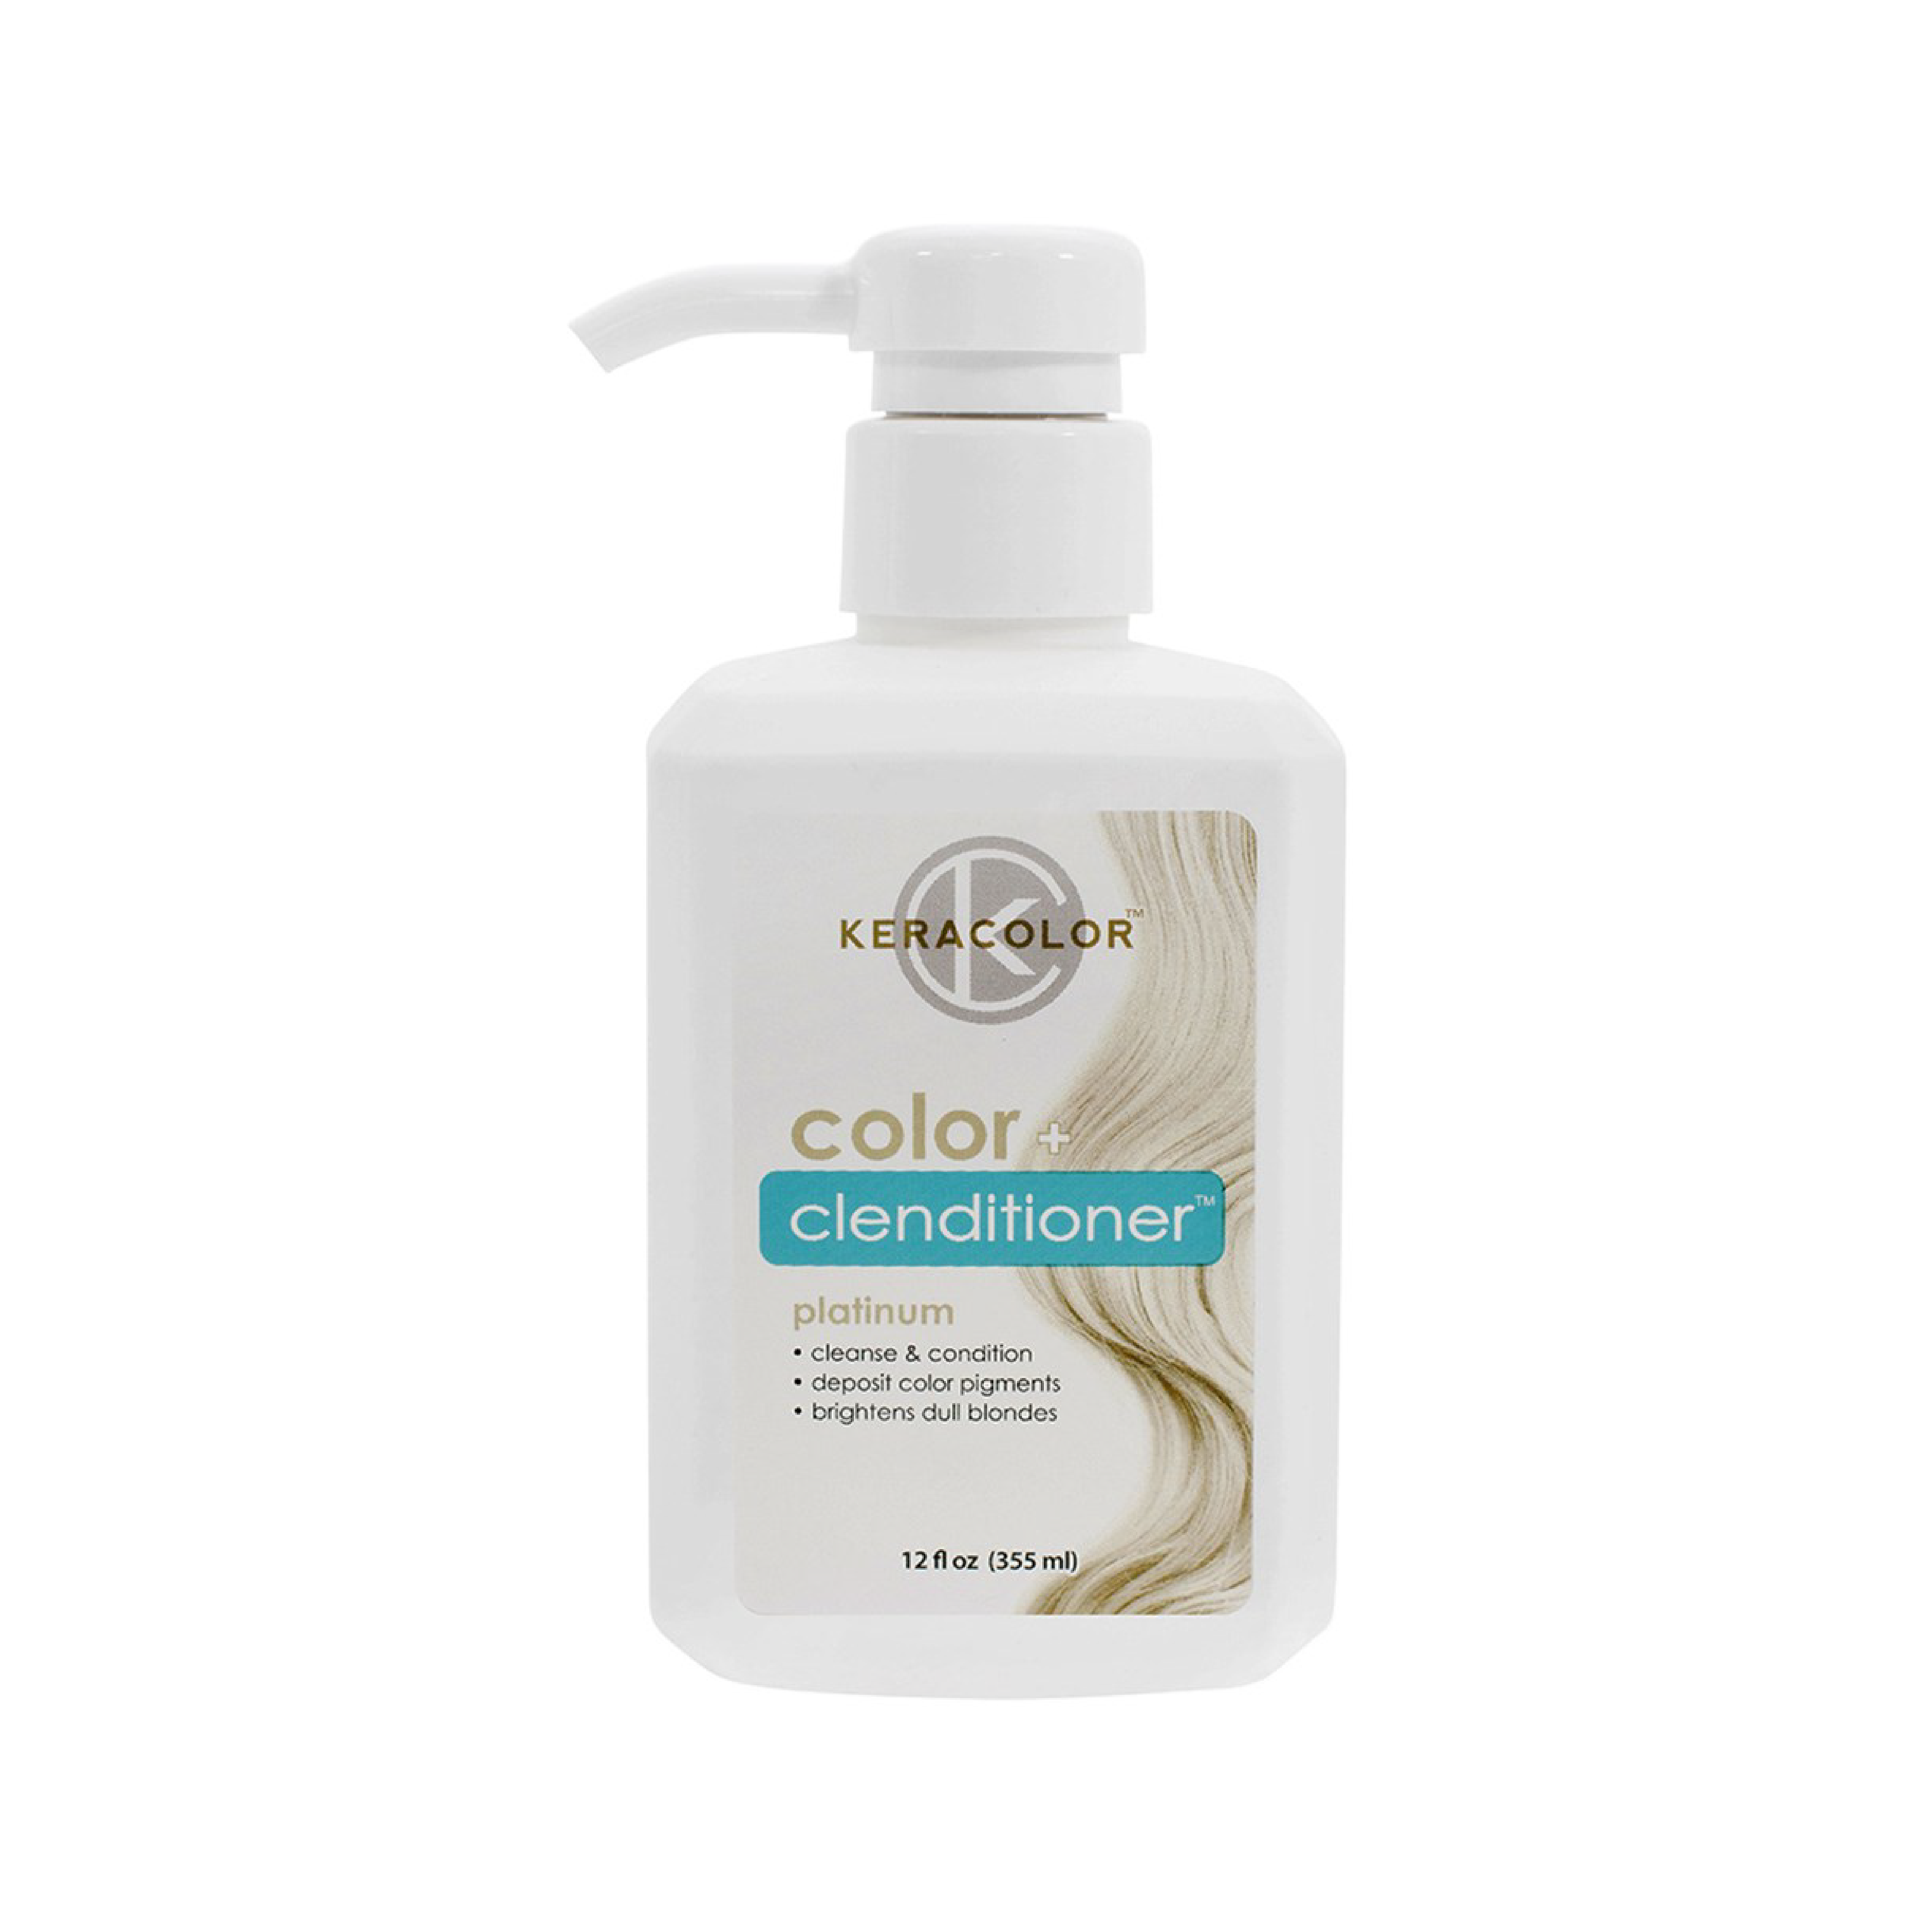 Keracolor Color Clenditioner Platinum Colouring Shampoo - 355ml